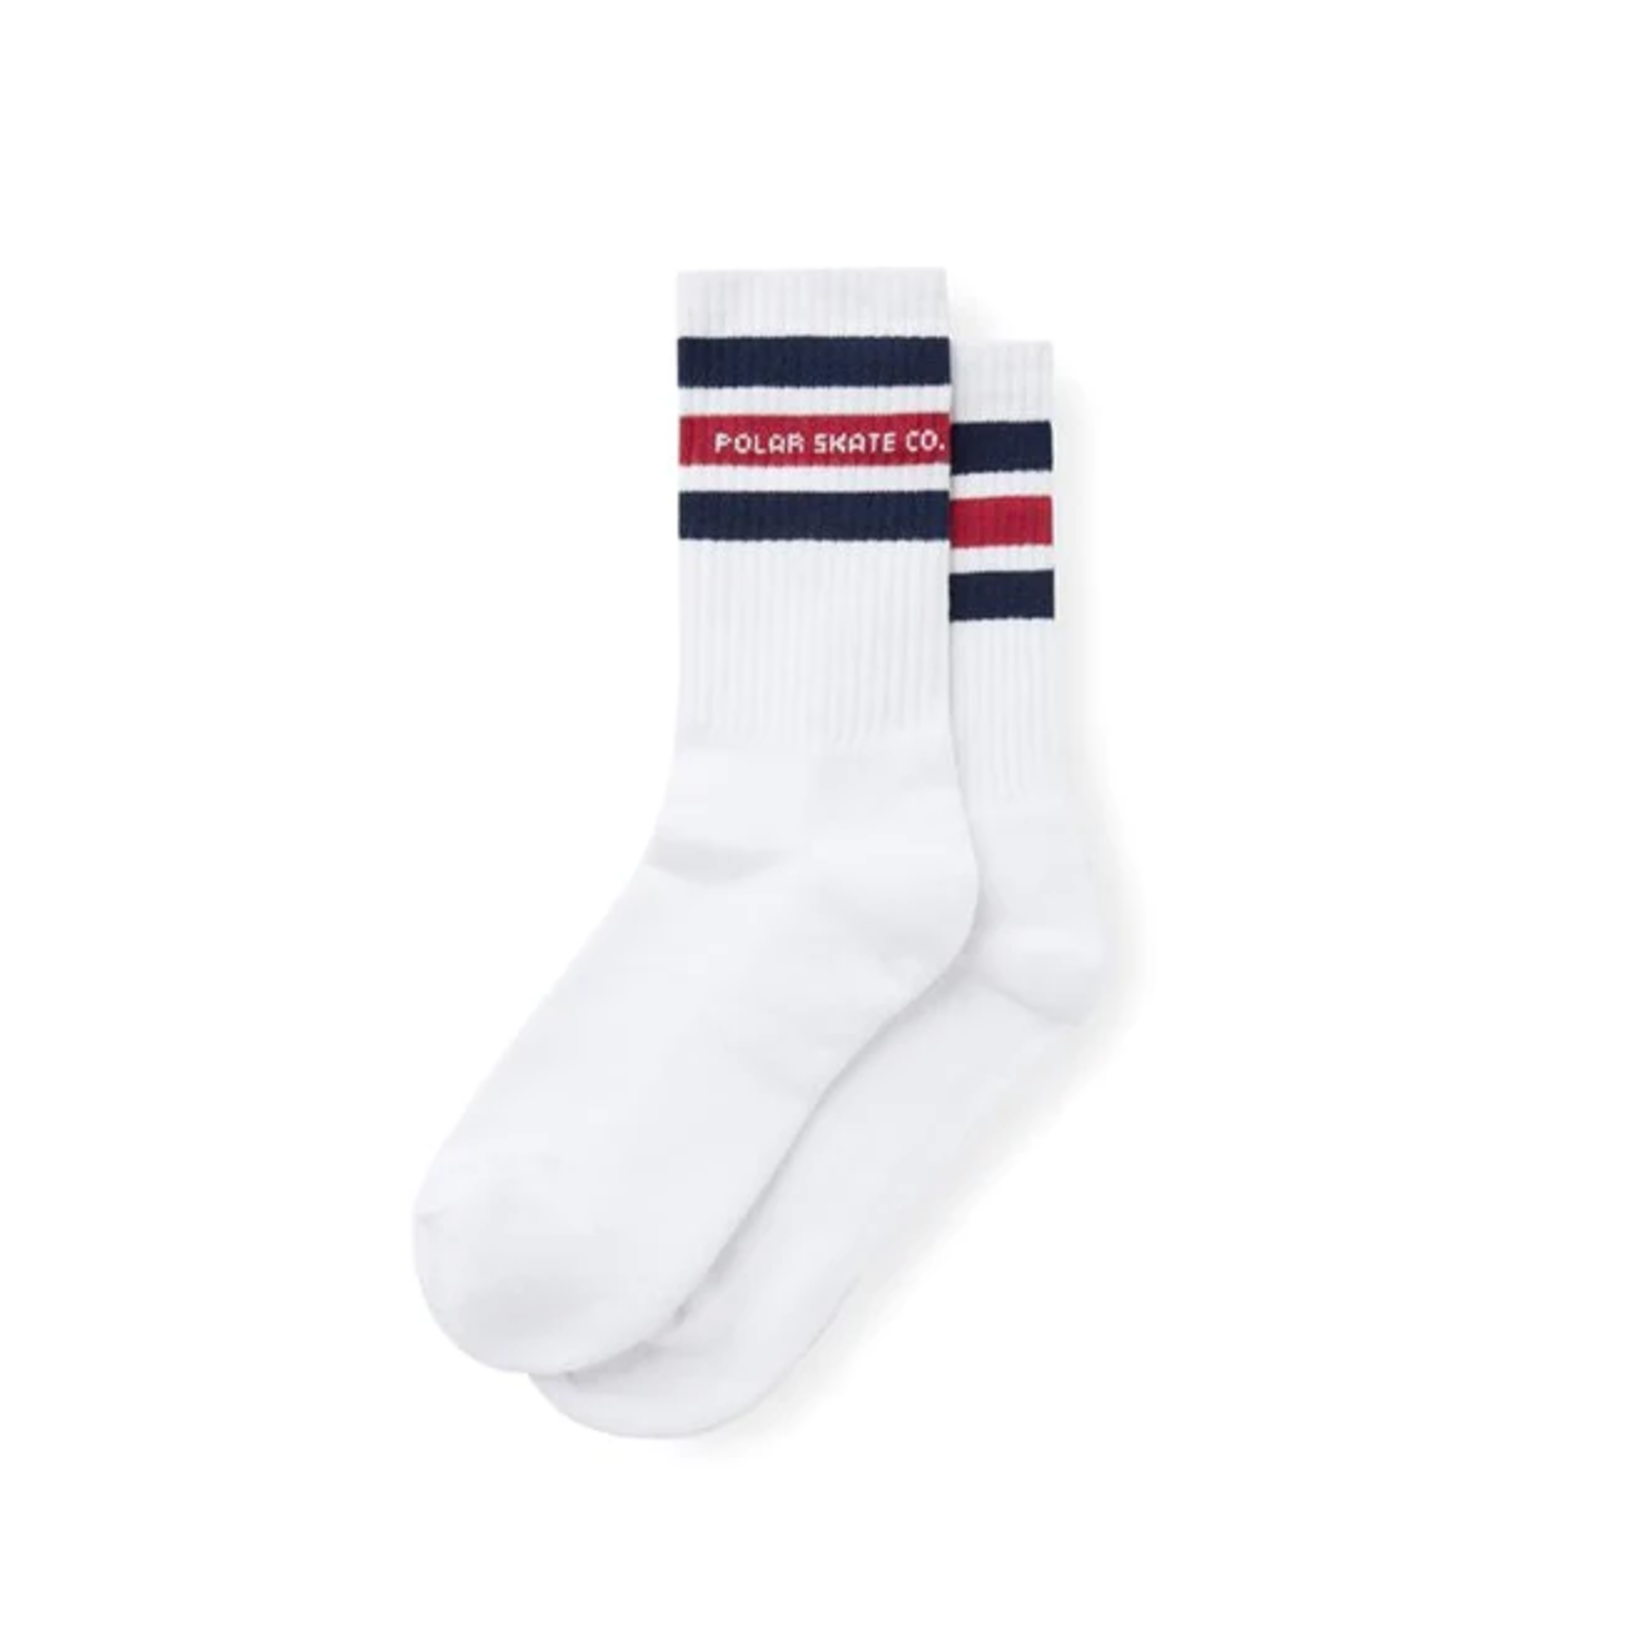 Polar Polar Fat Stripe Socks - White/Navy/Red